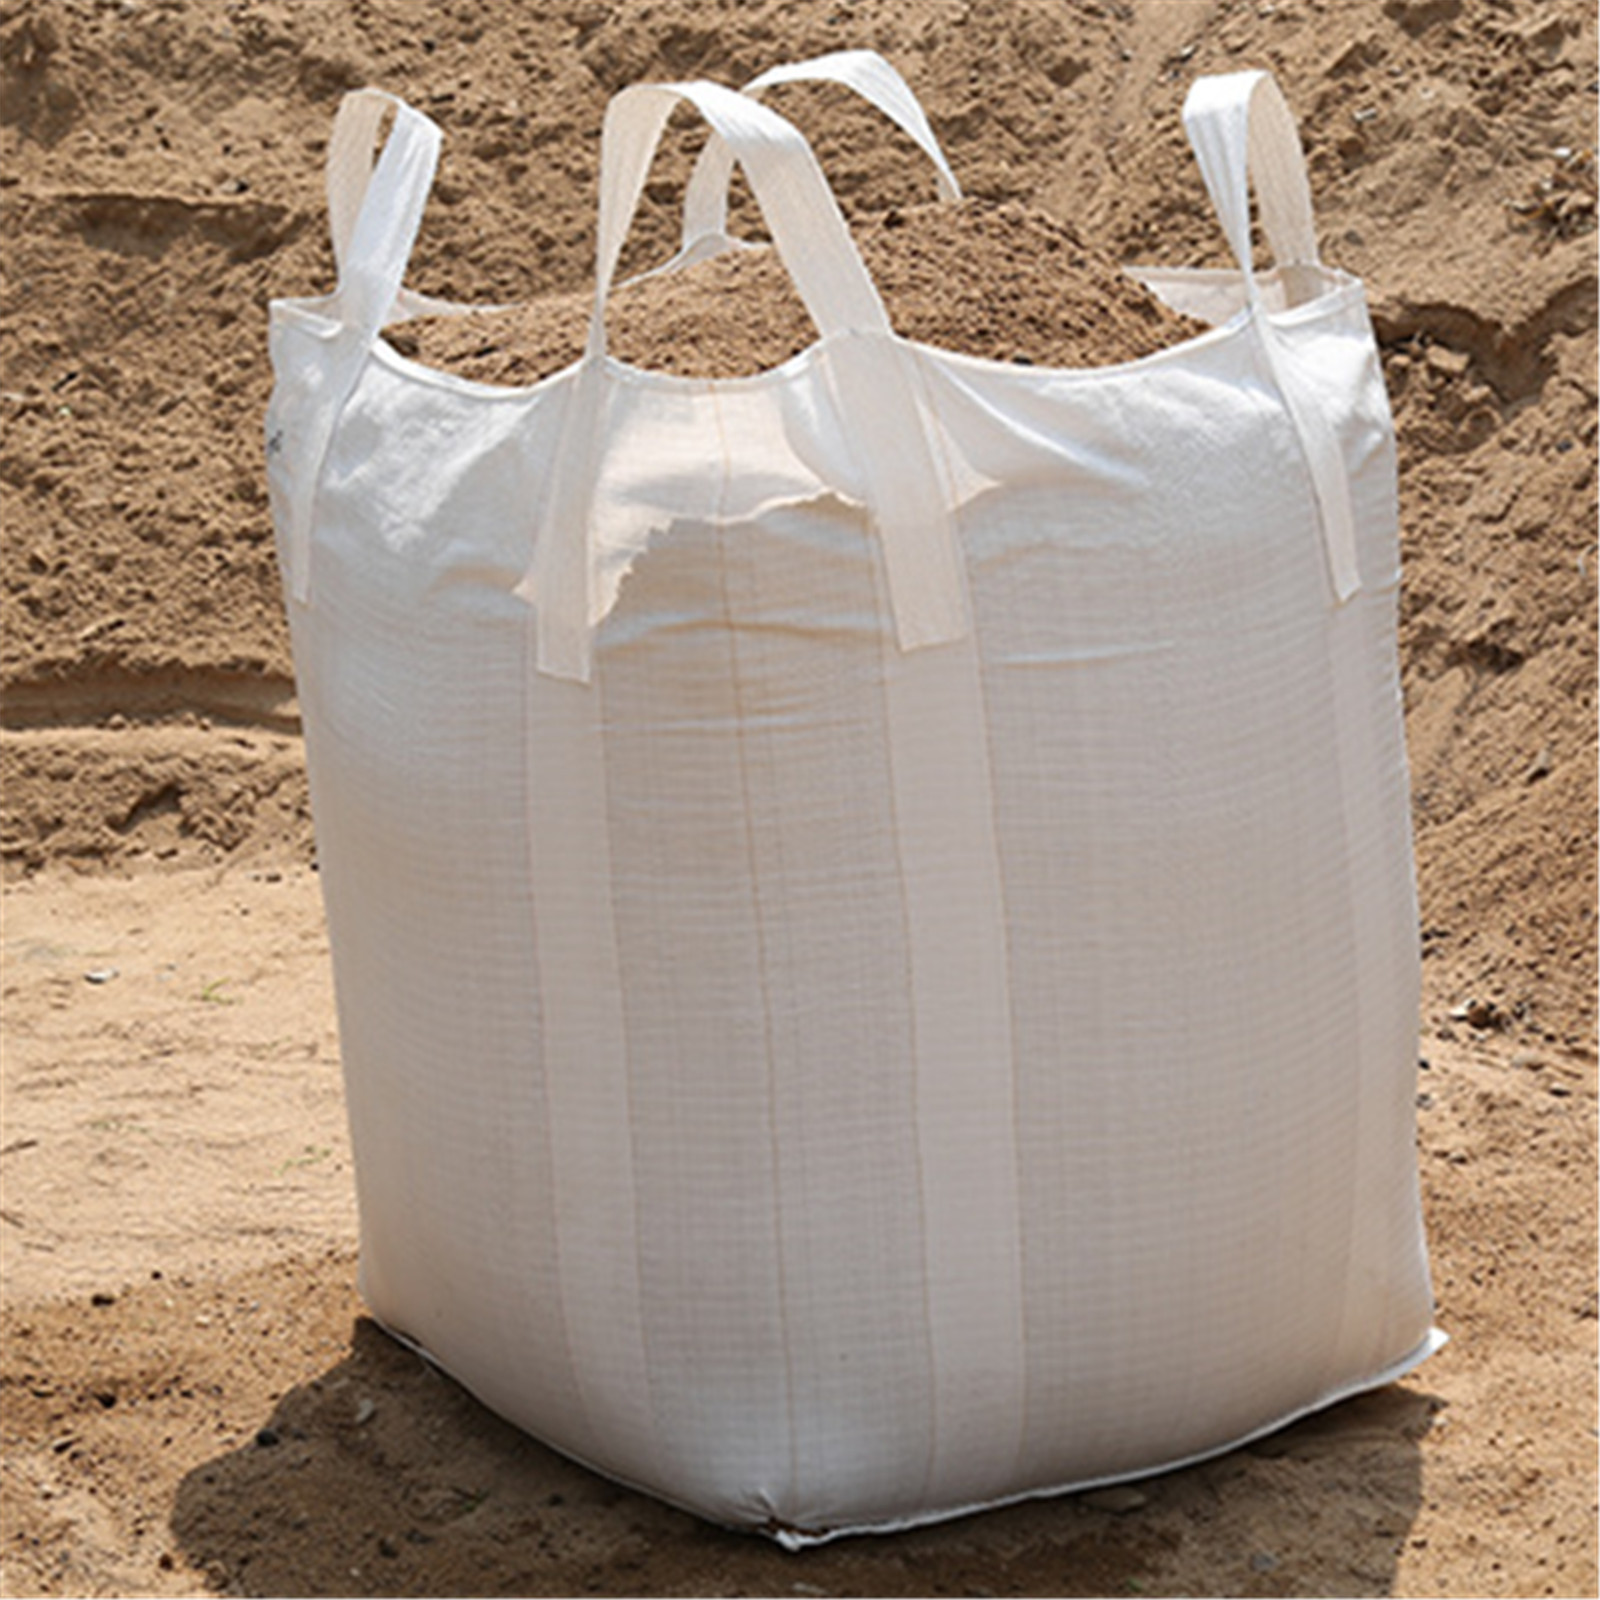 4# 1 Ton Bulk Bag Fibc Bags Builders Garden Rubble-sack Fibc Tonne Jumbo-waste Storage Bag For Gardening And Manufactured